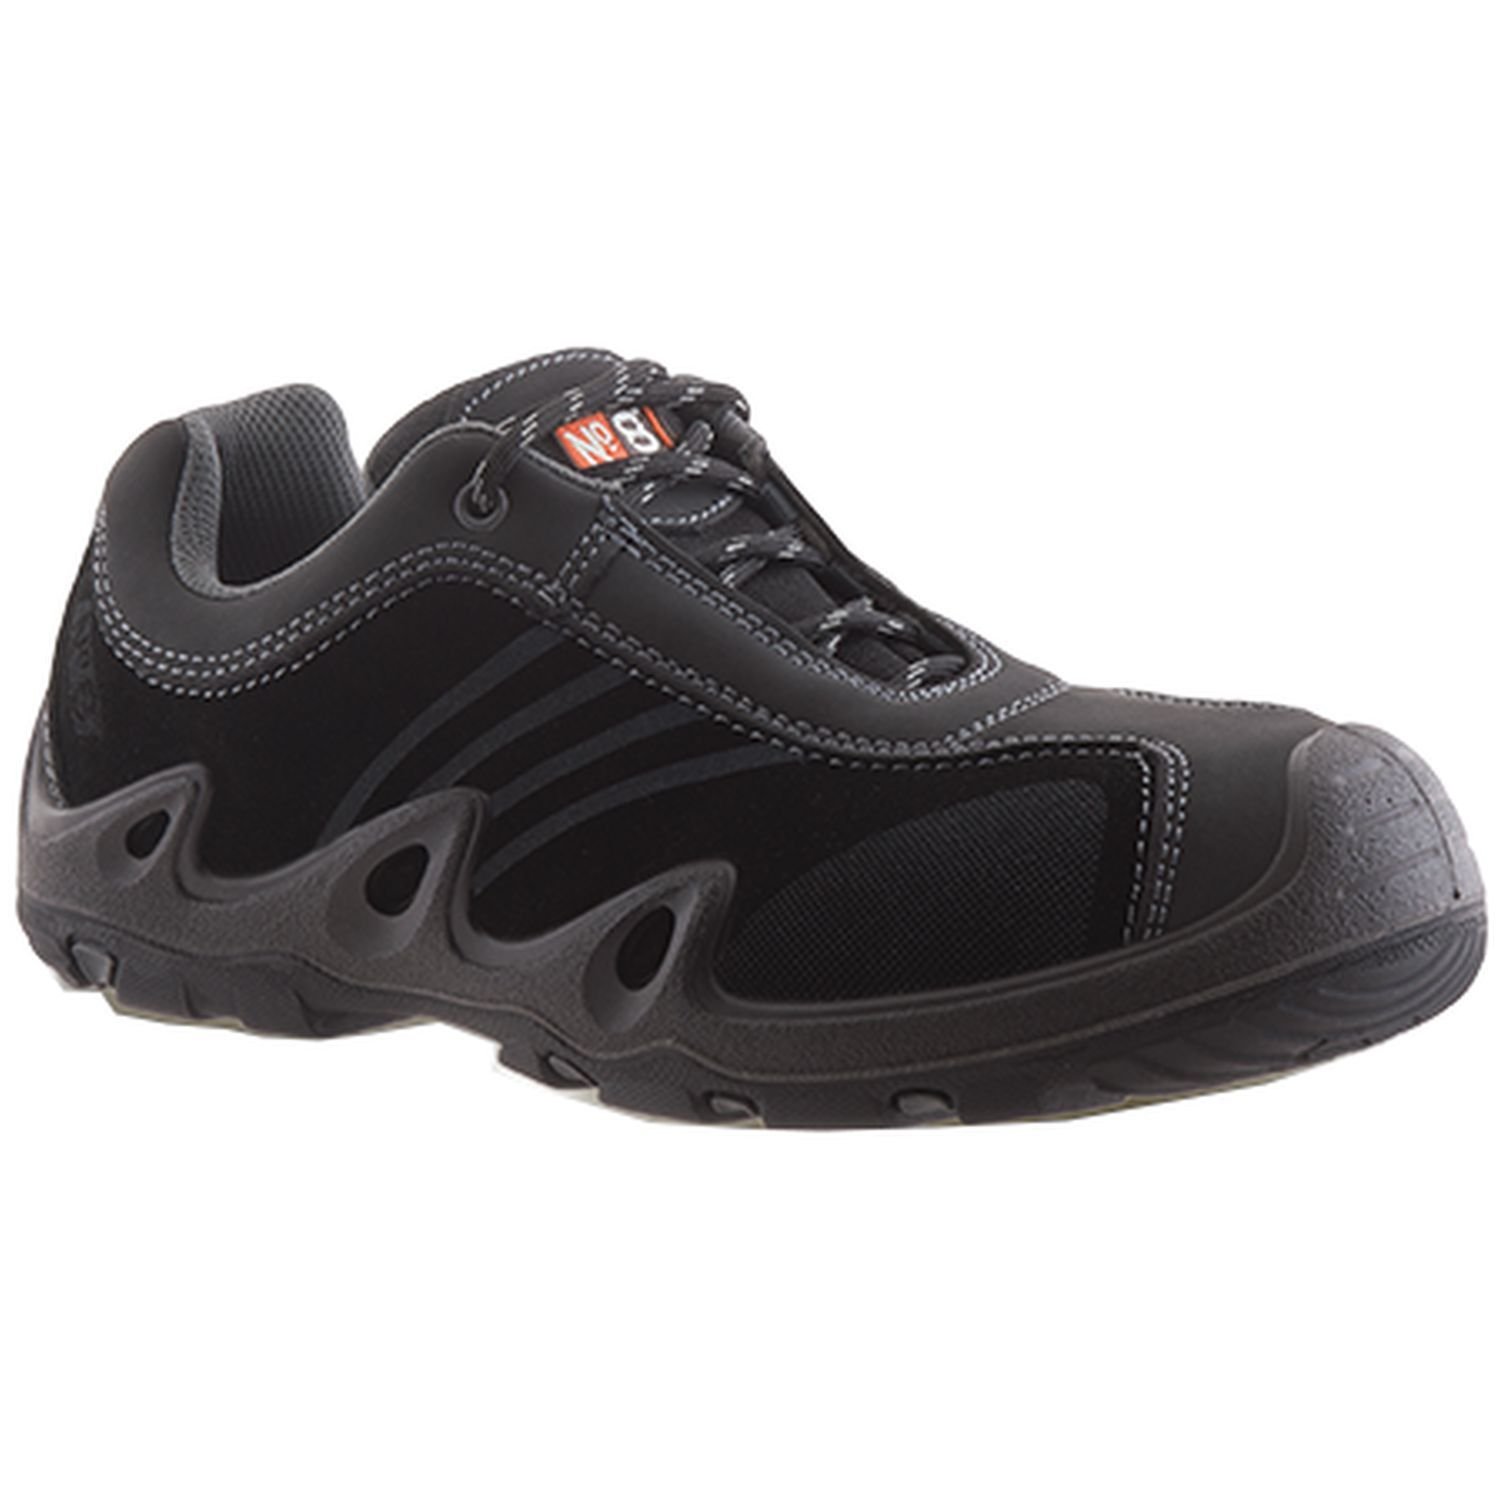 Apex BlackTrack Lace Up Composite Toe Safety Shoe Black/Grey